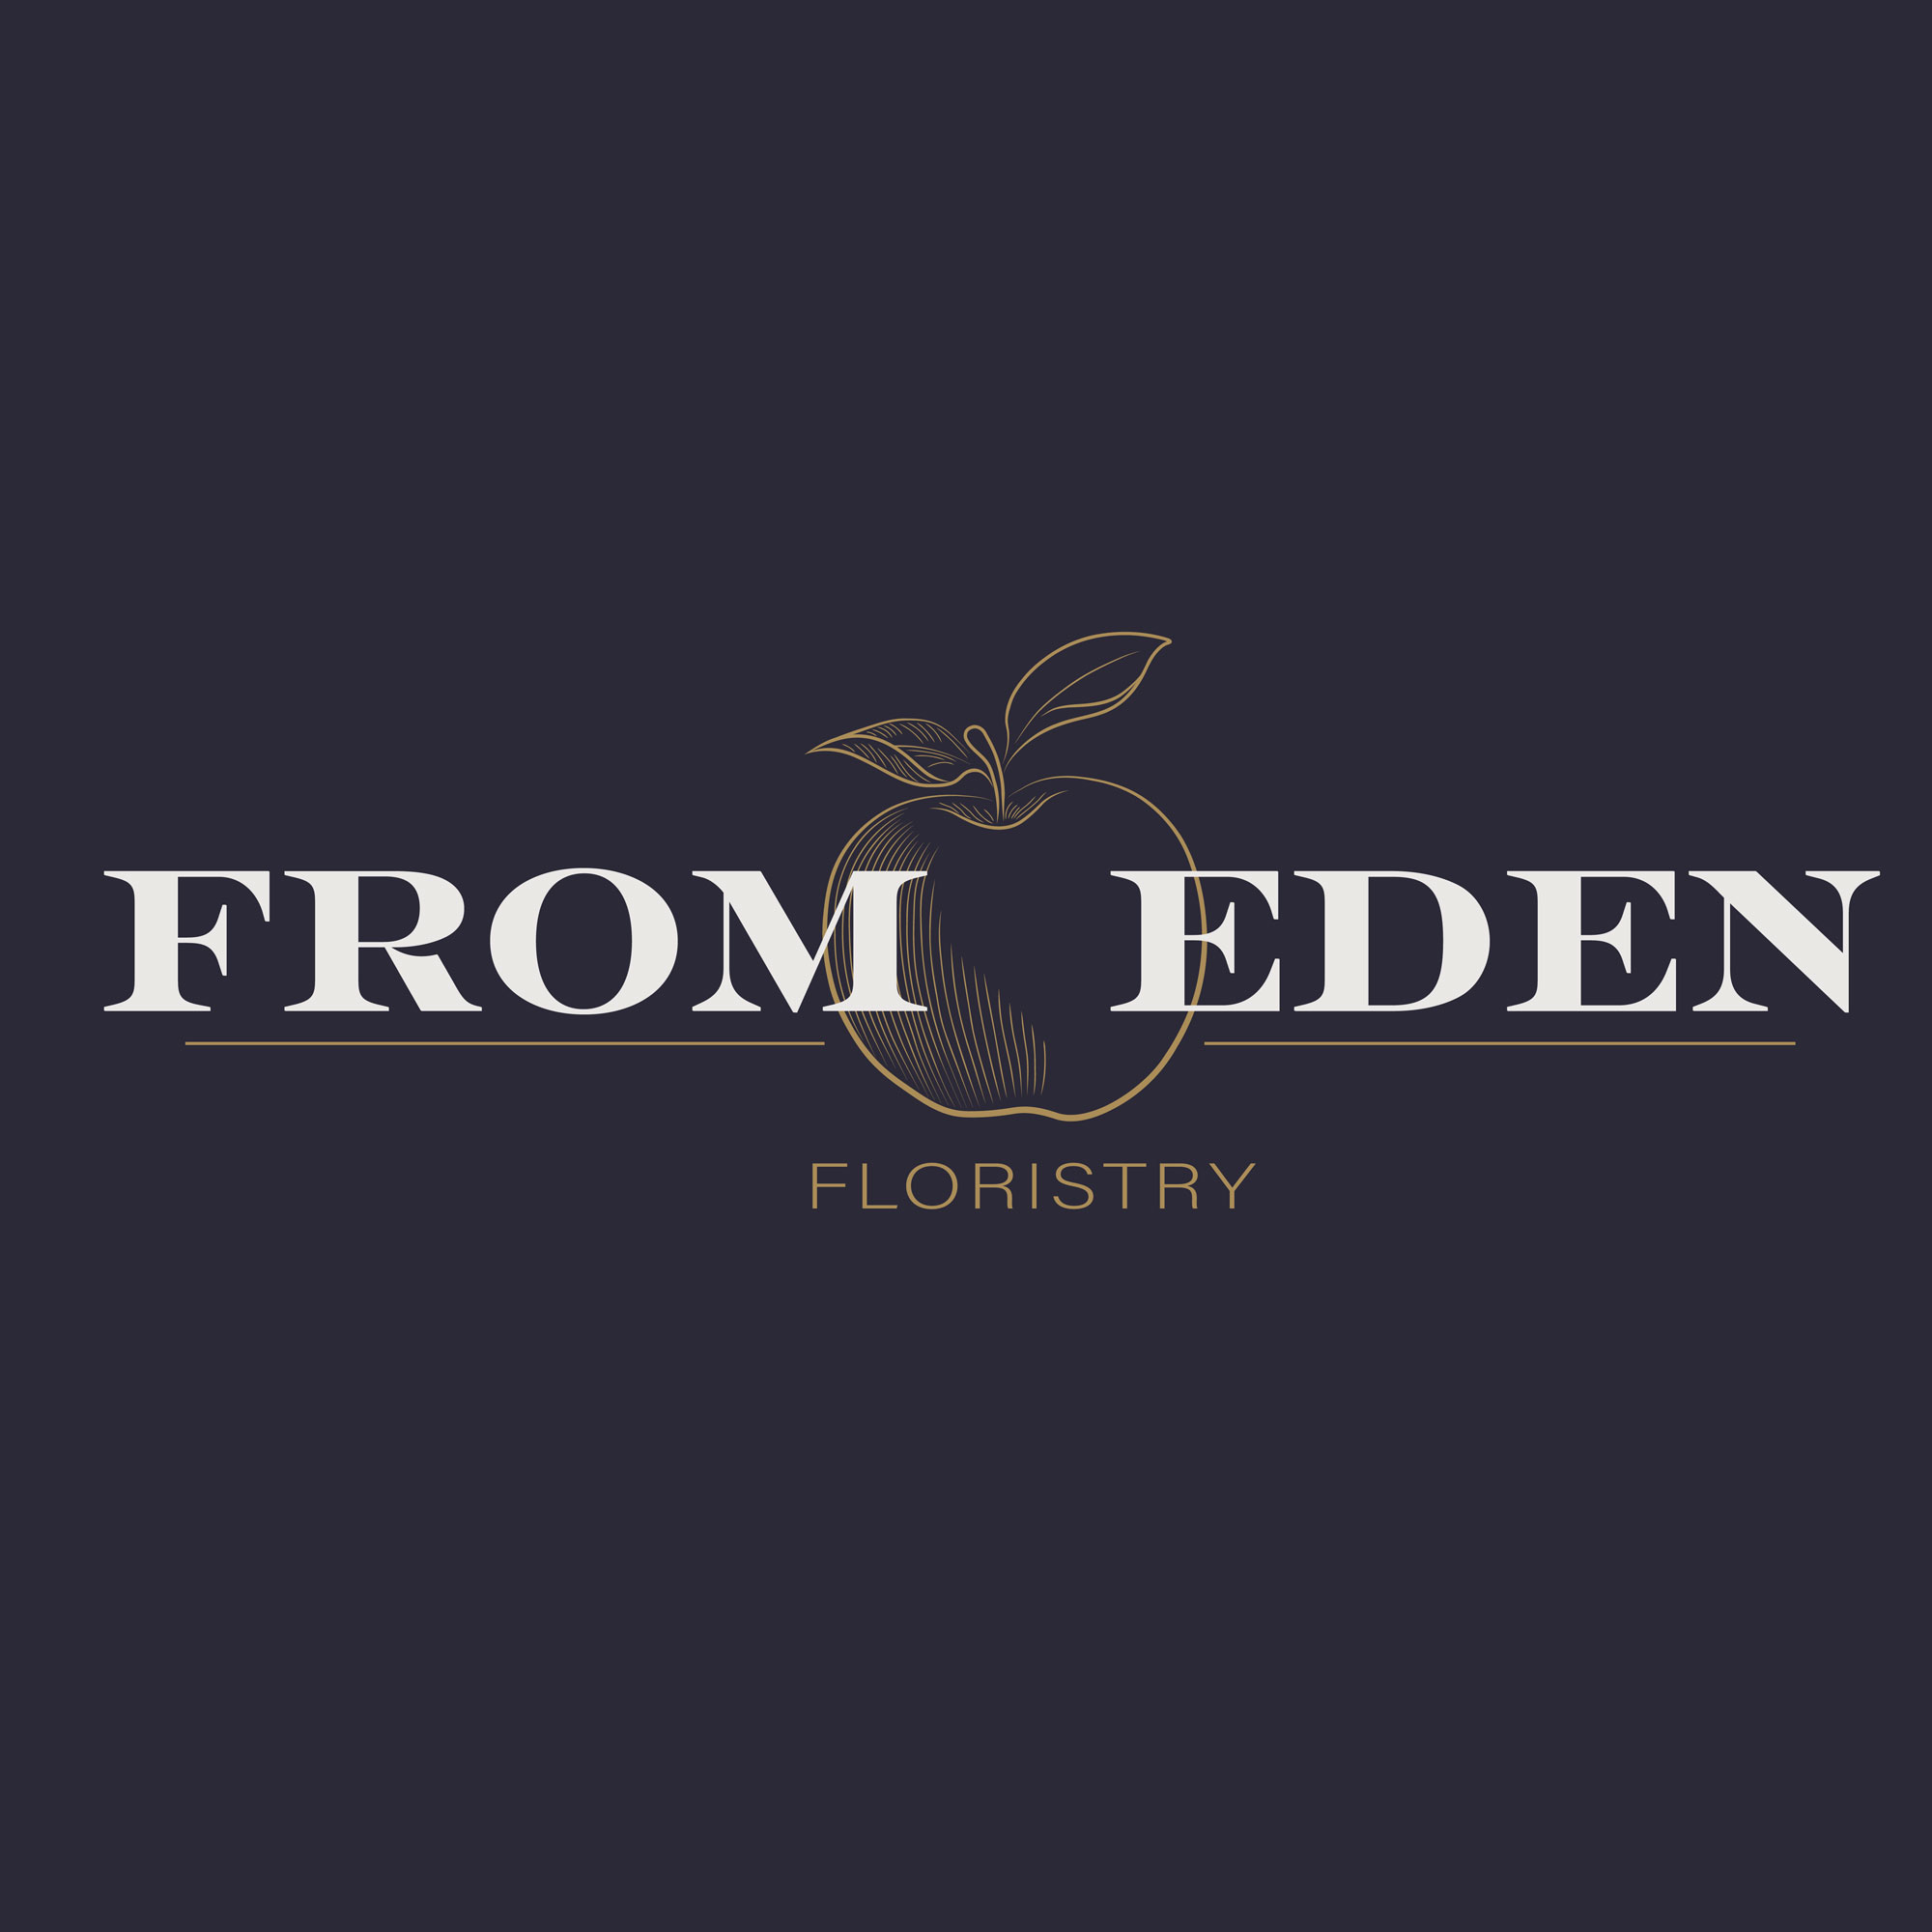 From Eden Floristry main logo